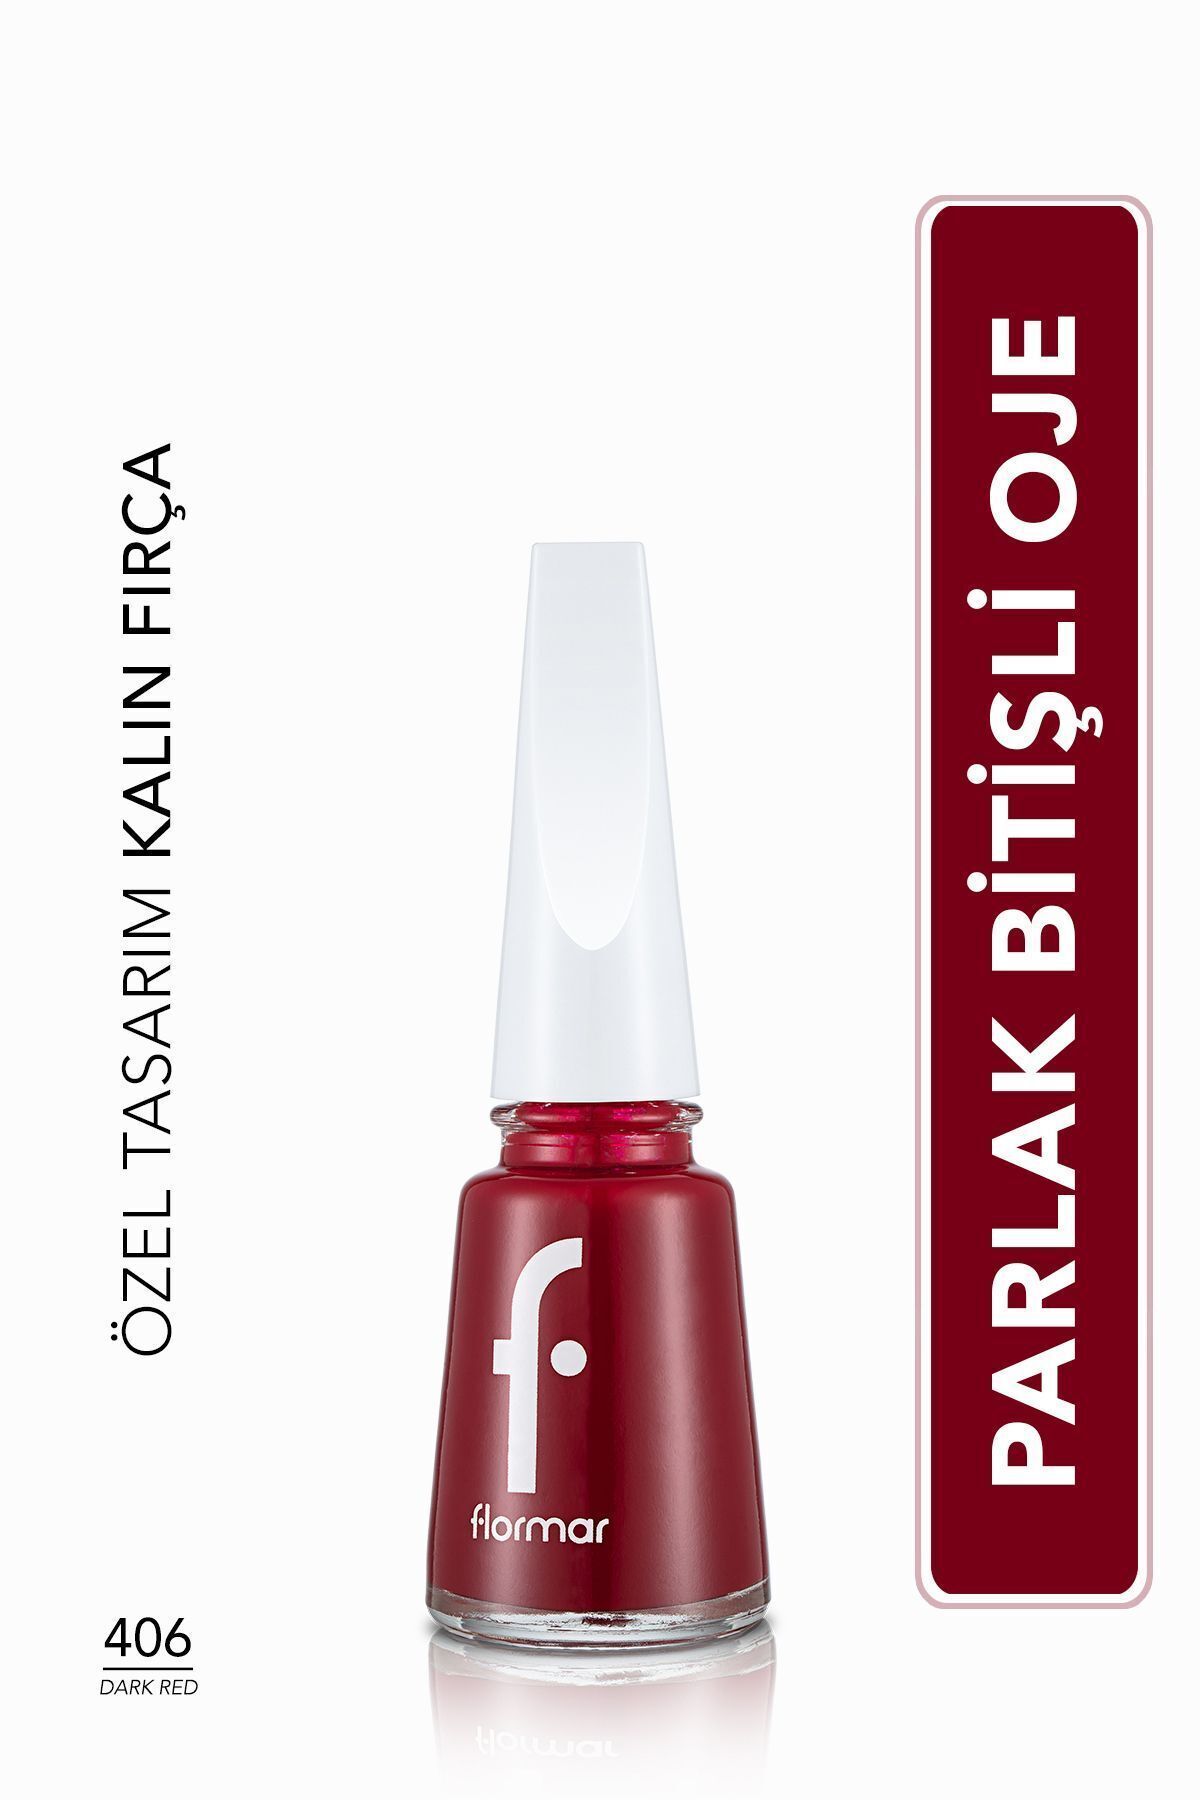 Flormar Nail Enamel Yüksek Pigmentli & Parlak Bitişli Oje Fne-406 Dark Red